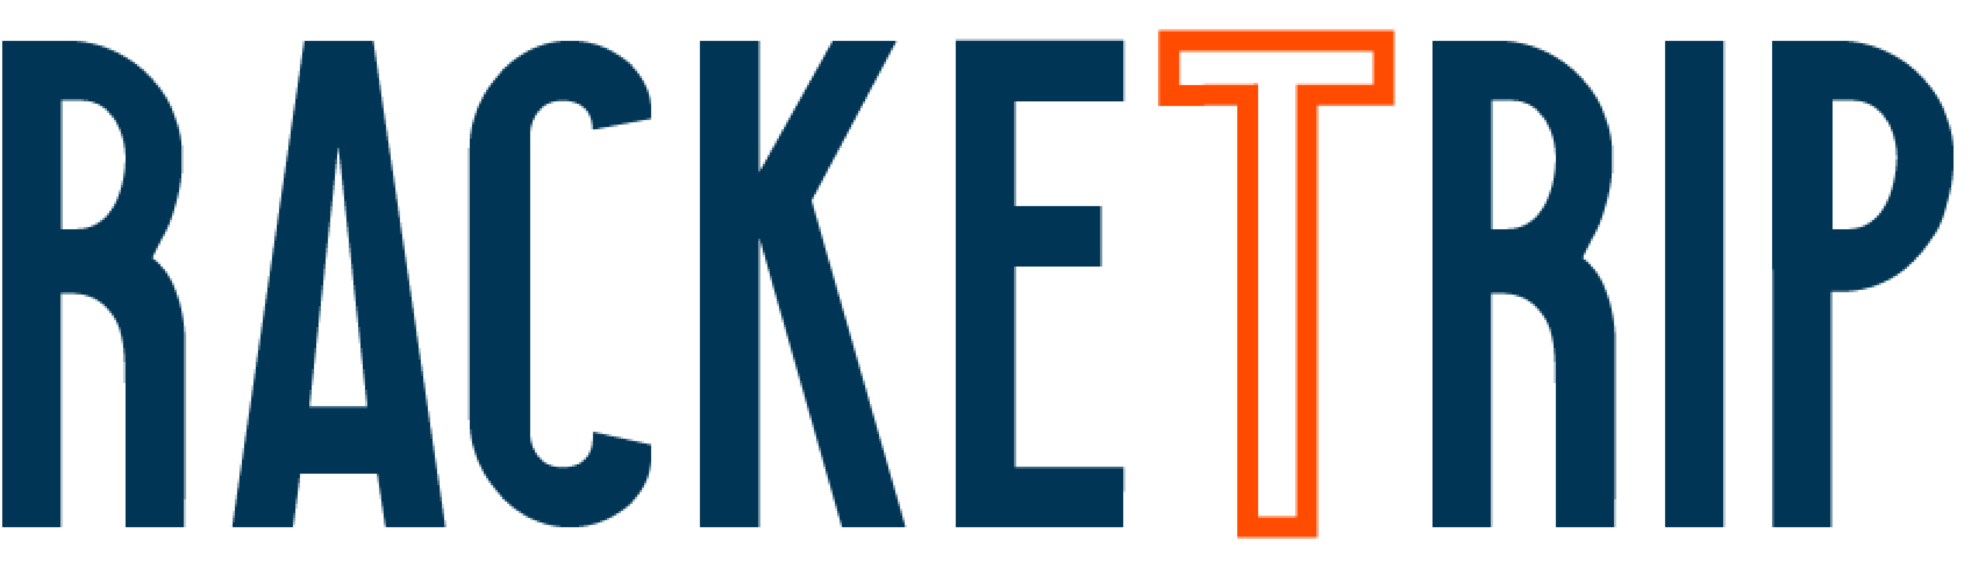 logo-rackettrip-blu